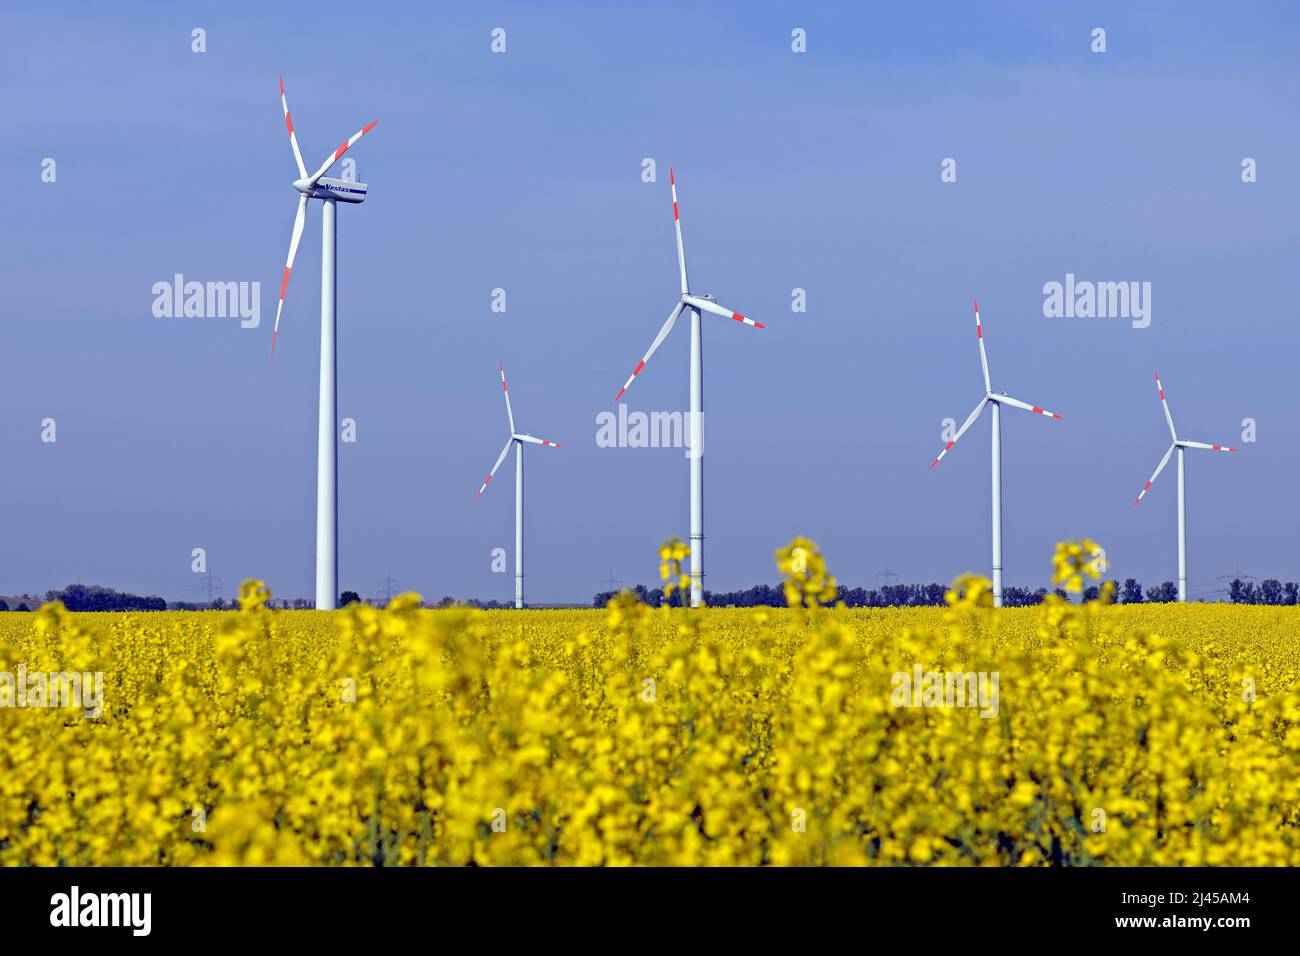 Windkraftanlagen in Rapsfeld (Brassica napus) erneuerbare Energie, Erneuerbare Energien, Steigende Energiepreise, Rapsfeld, Stock Photo